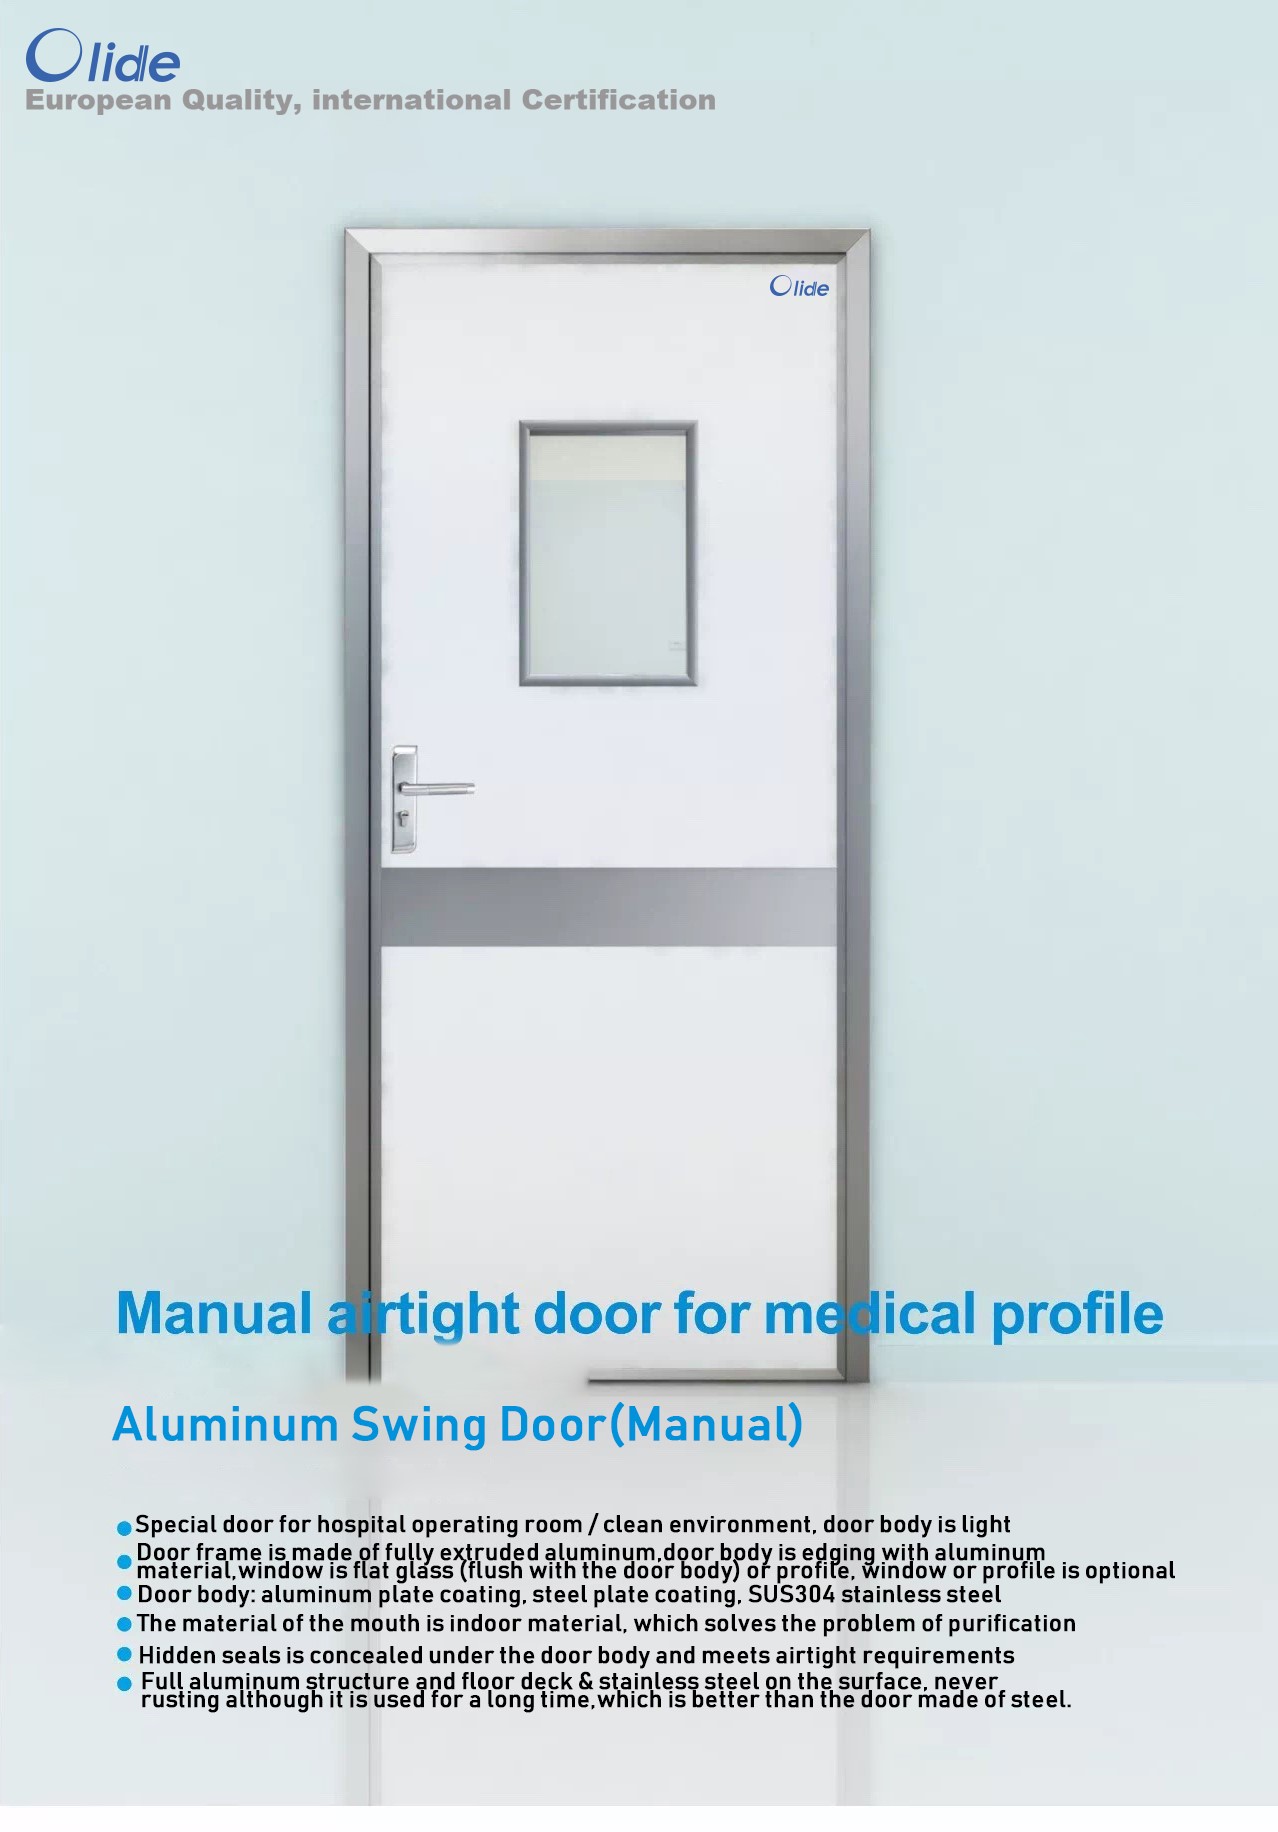 manual airight Aluminum swing door for medicial profile 1